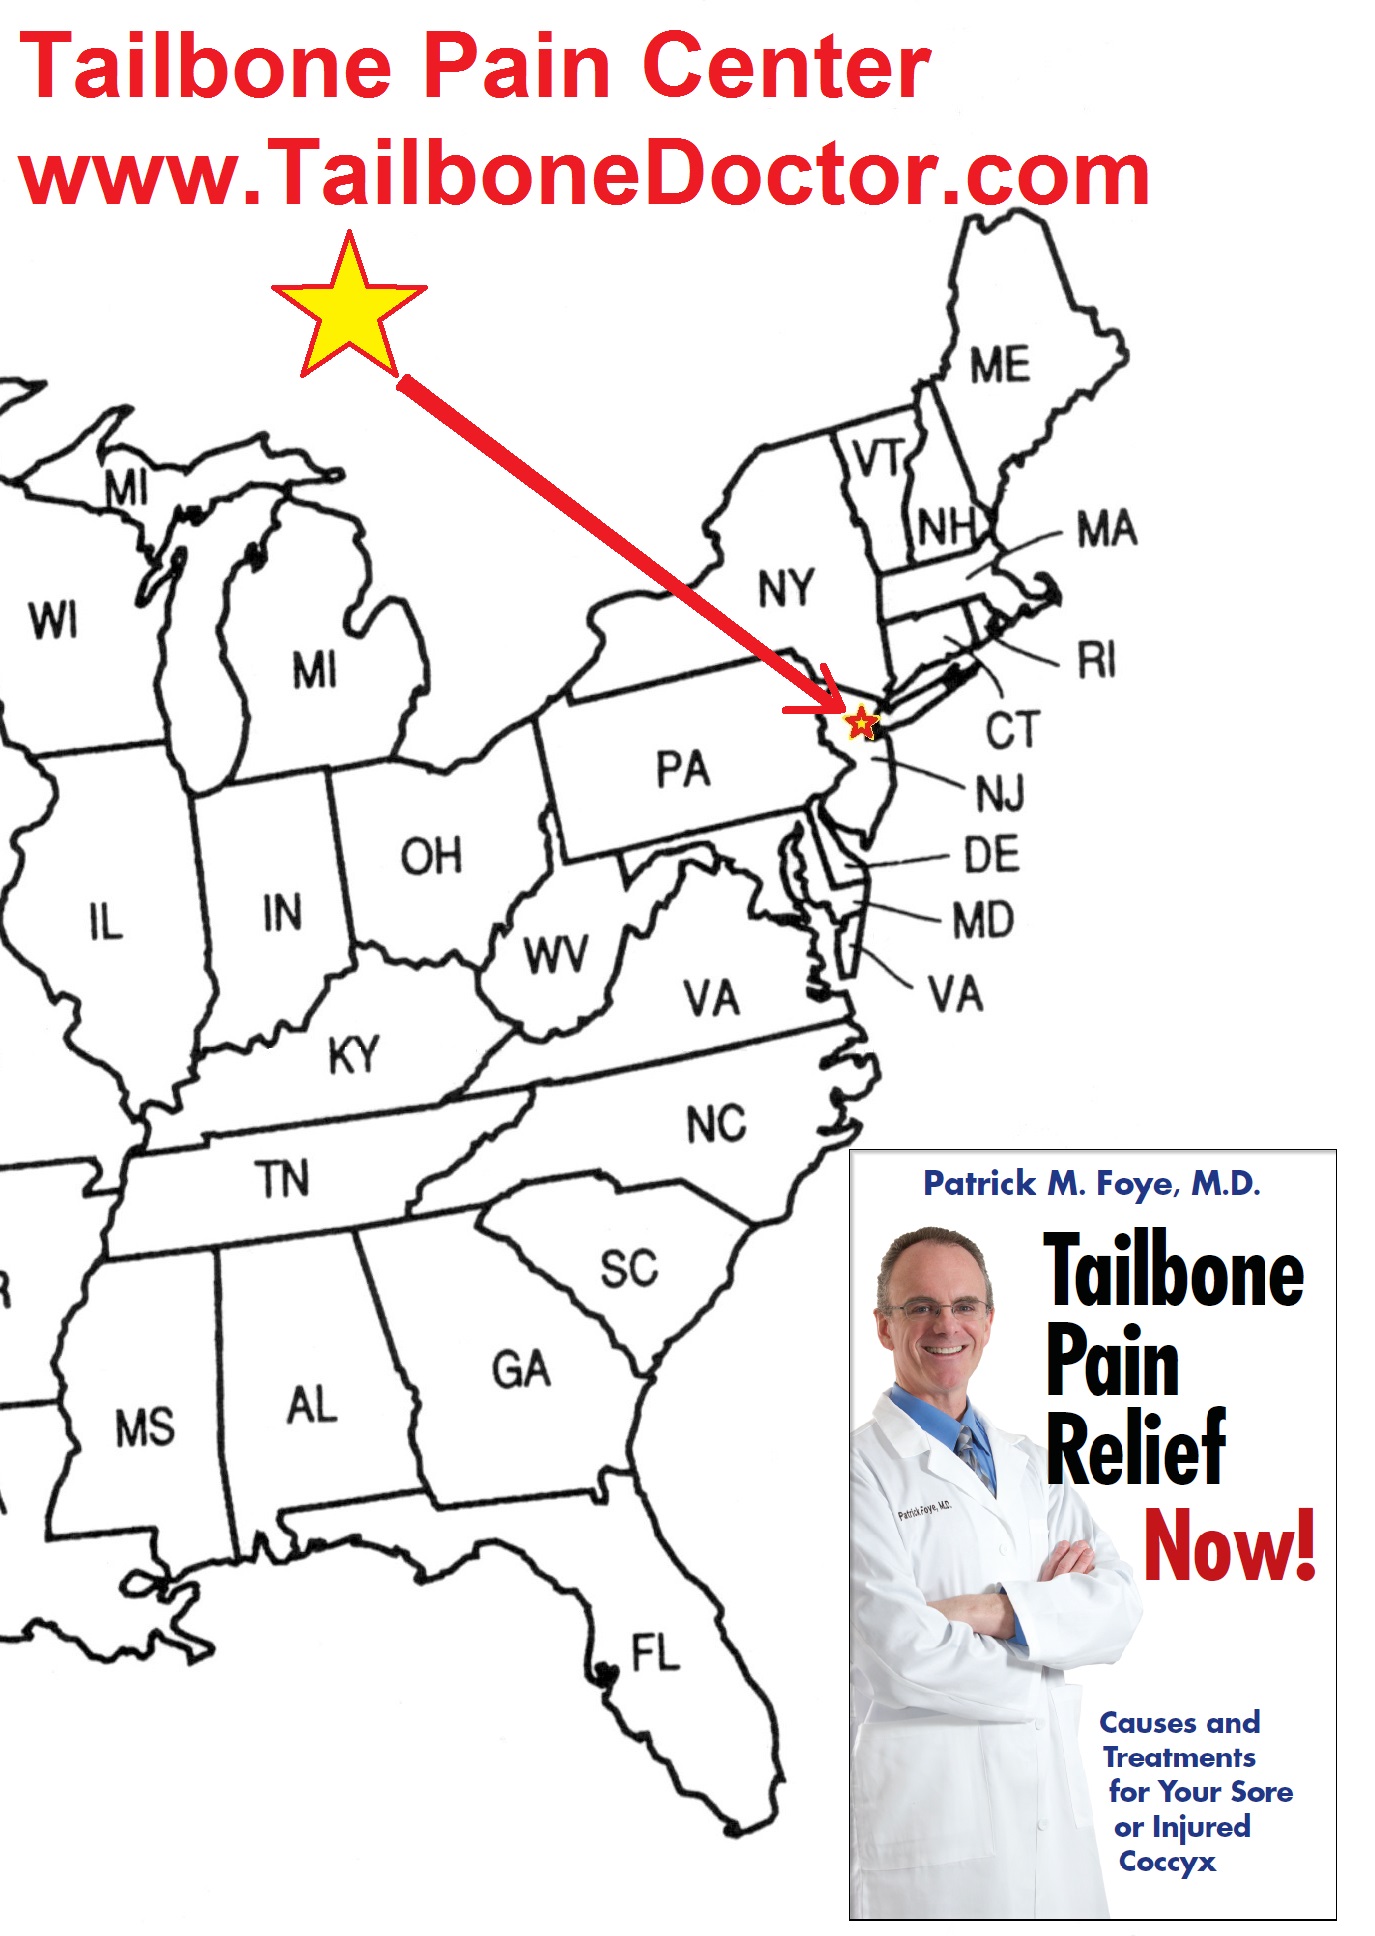 https://tailbonedoctor.com/wp-content/uploads/2017/12/Tailbone-Pain-Center-Eastern-USA-map-Coccyx-Pain-Center.jpg